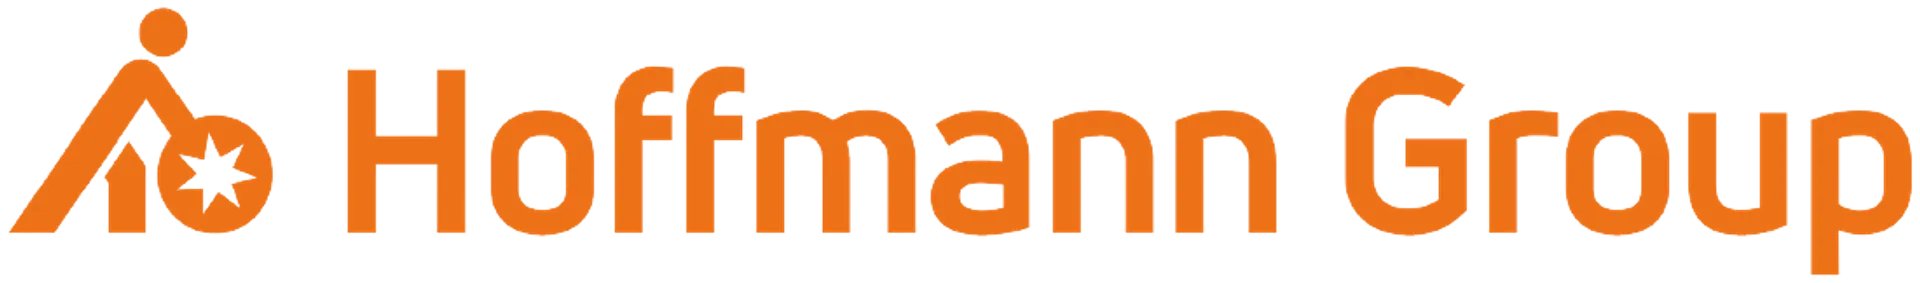 HOFFMANN  GROUP logo